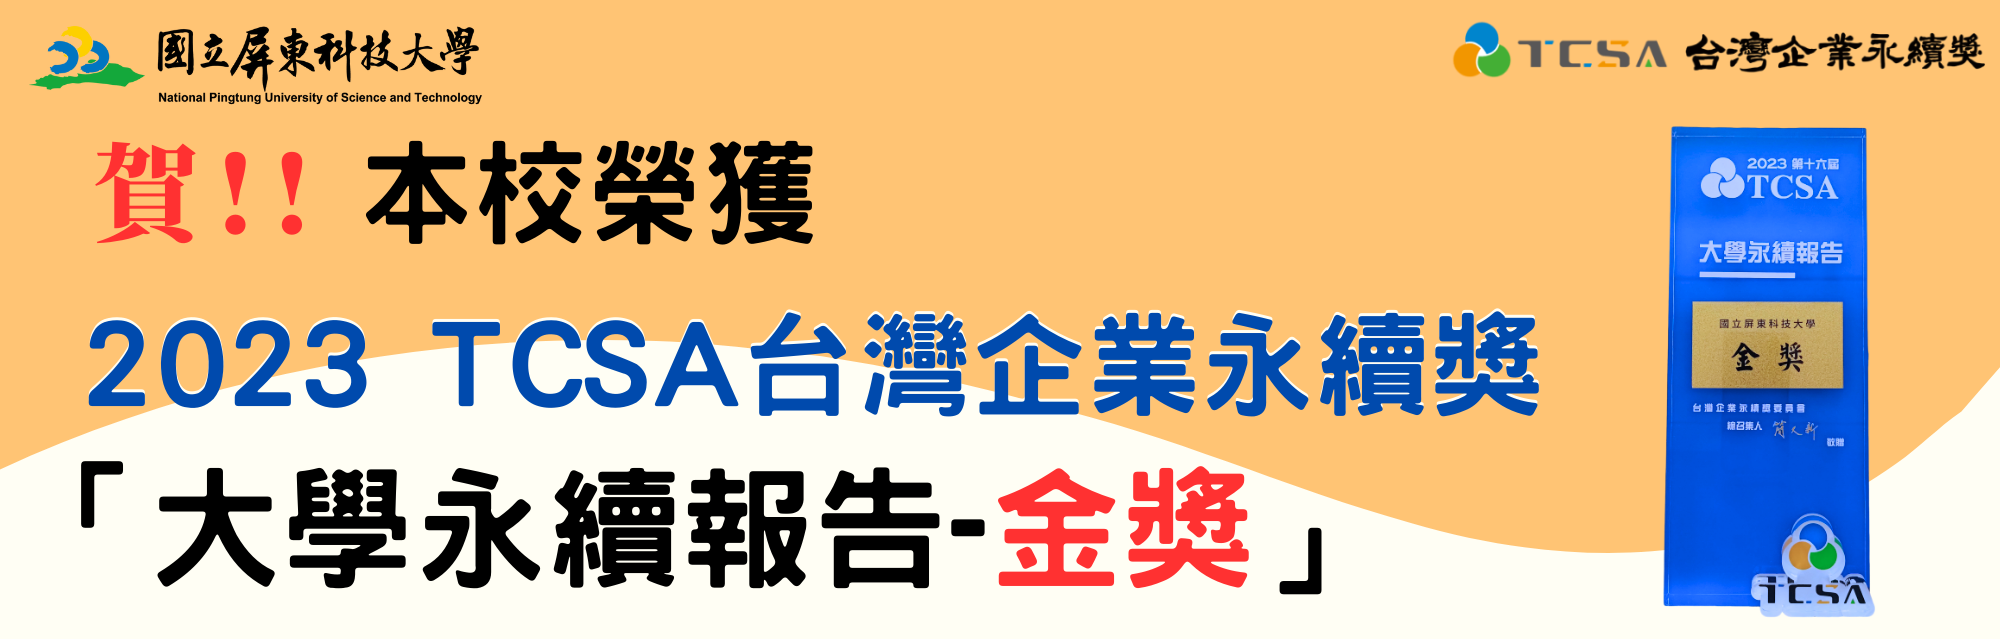 2023_TCSA台灣企業永續獎-金獎